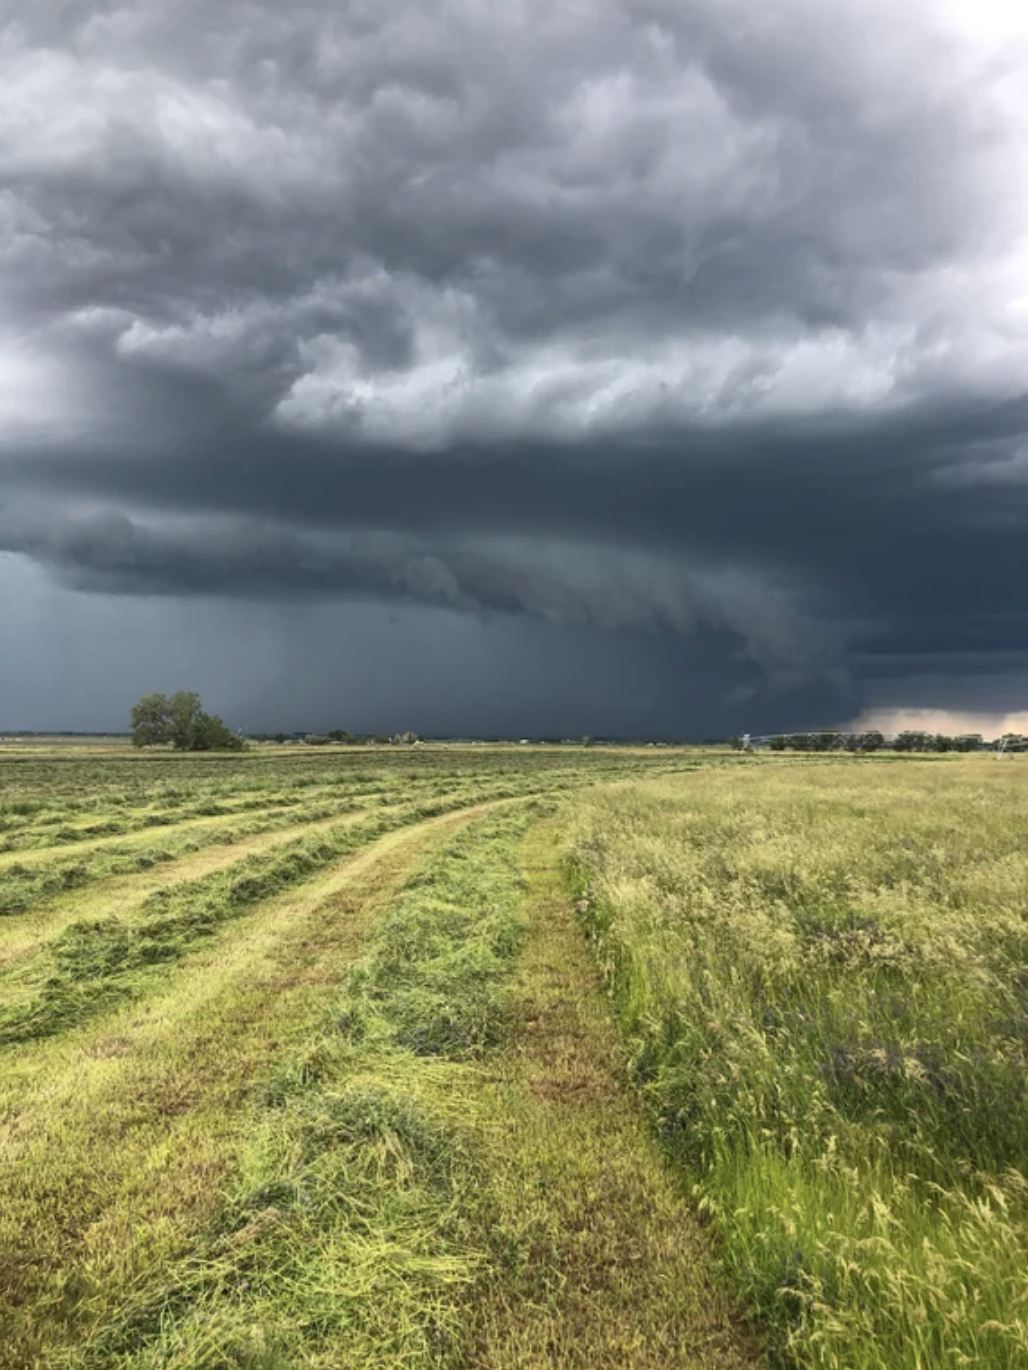 Storm just missed my hay field Alberta, Canada